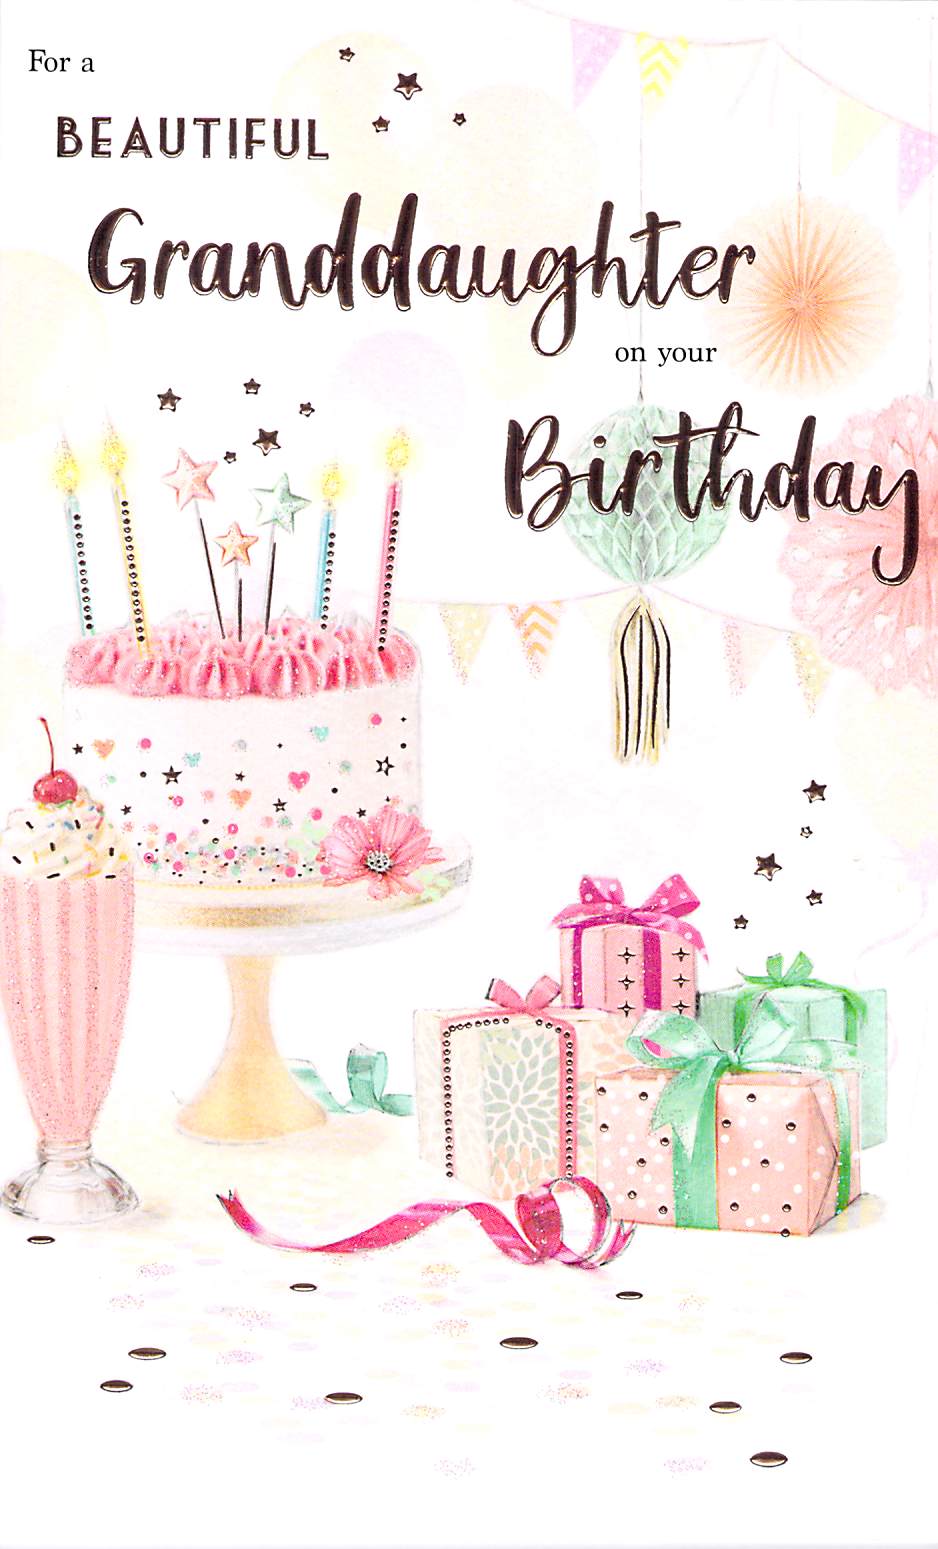 Granddaughter Birthday - Cake - Greeting Card - Multibuy Discount